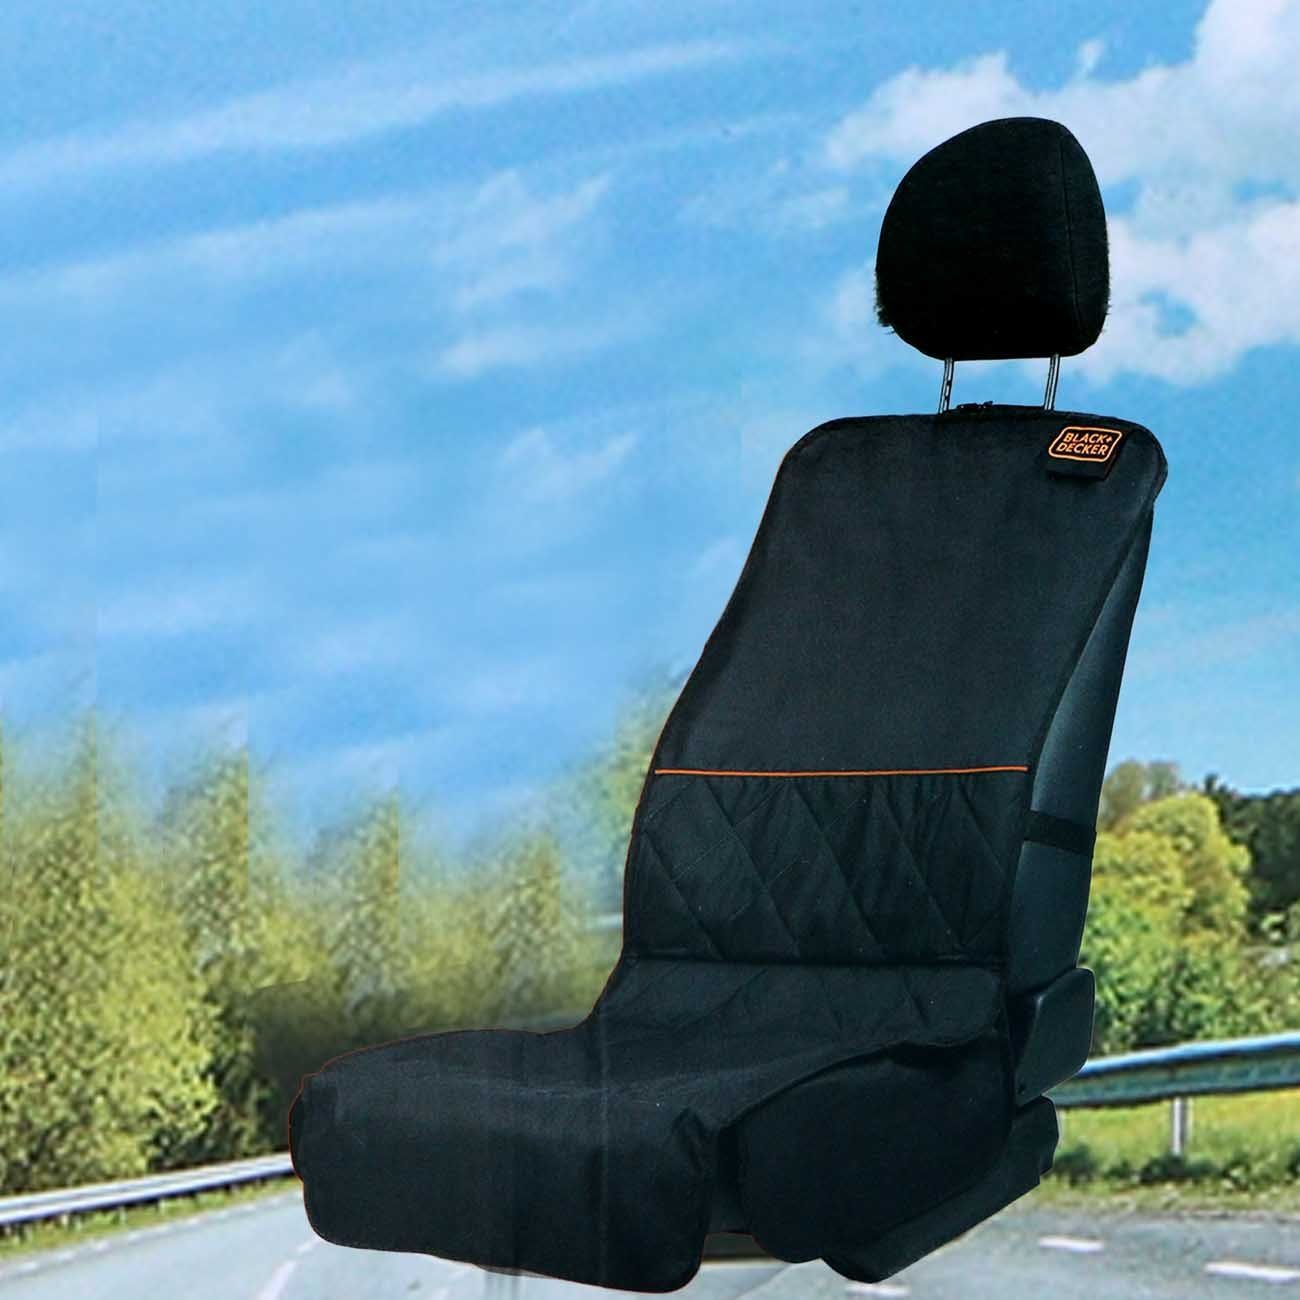 Sitzschoner Autositzschutz, Autositzschutz Autositzauflage, Black+Decker Auto